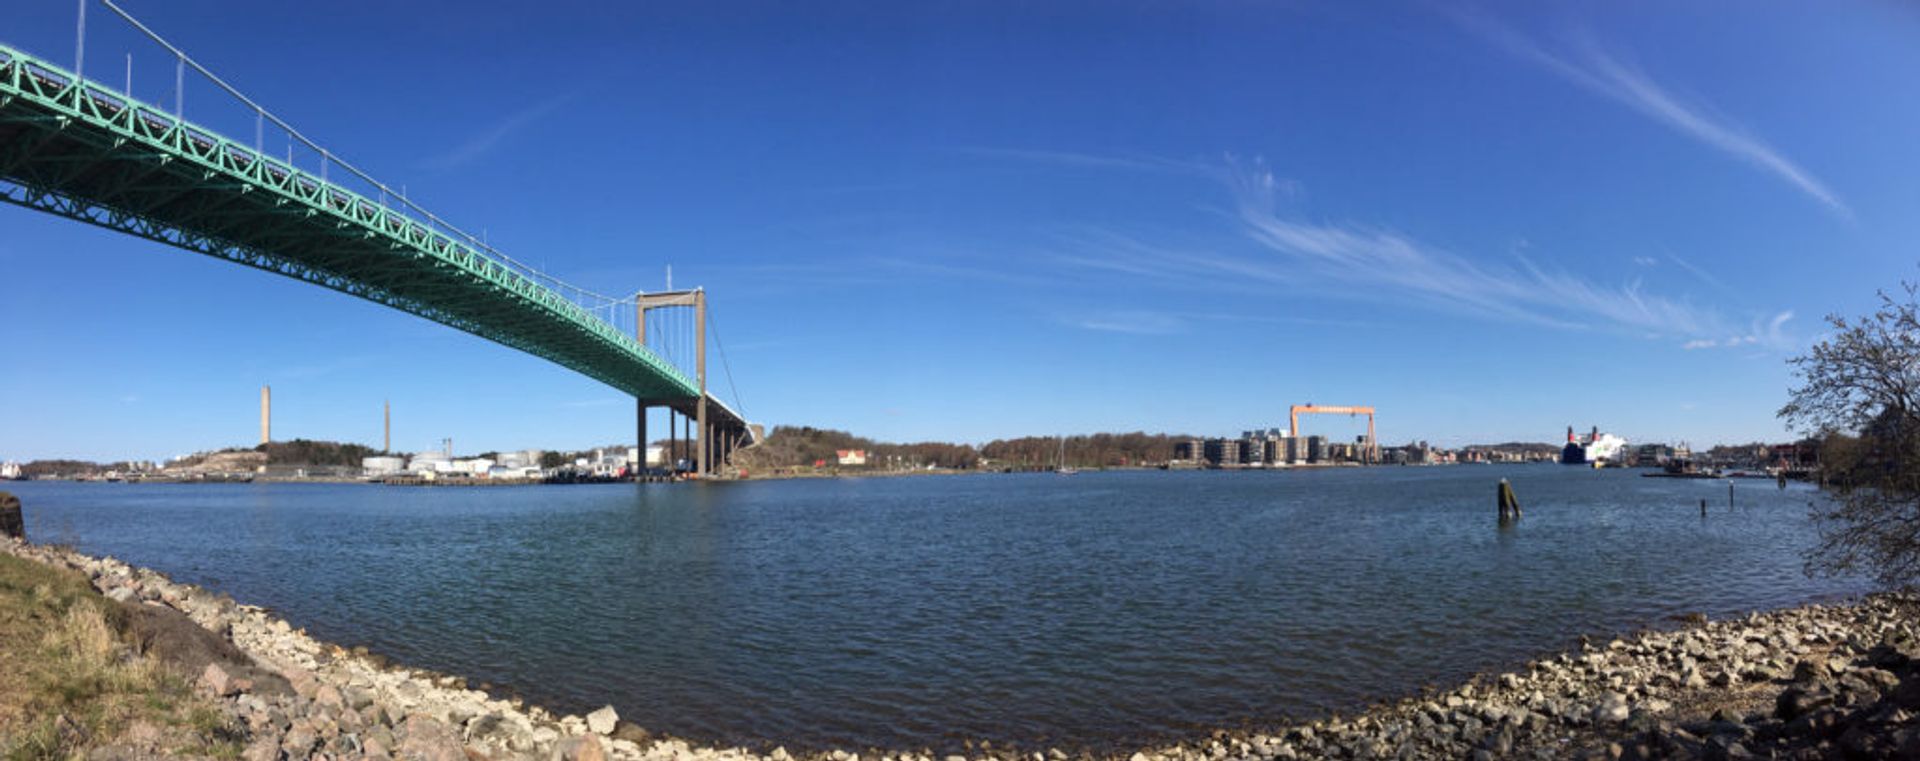 Götaälvbron bridge stretching across the river in Gothenburg